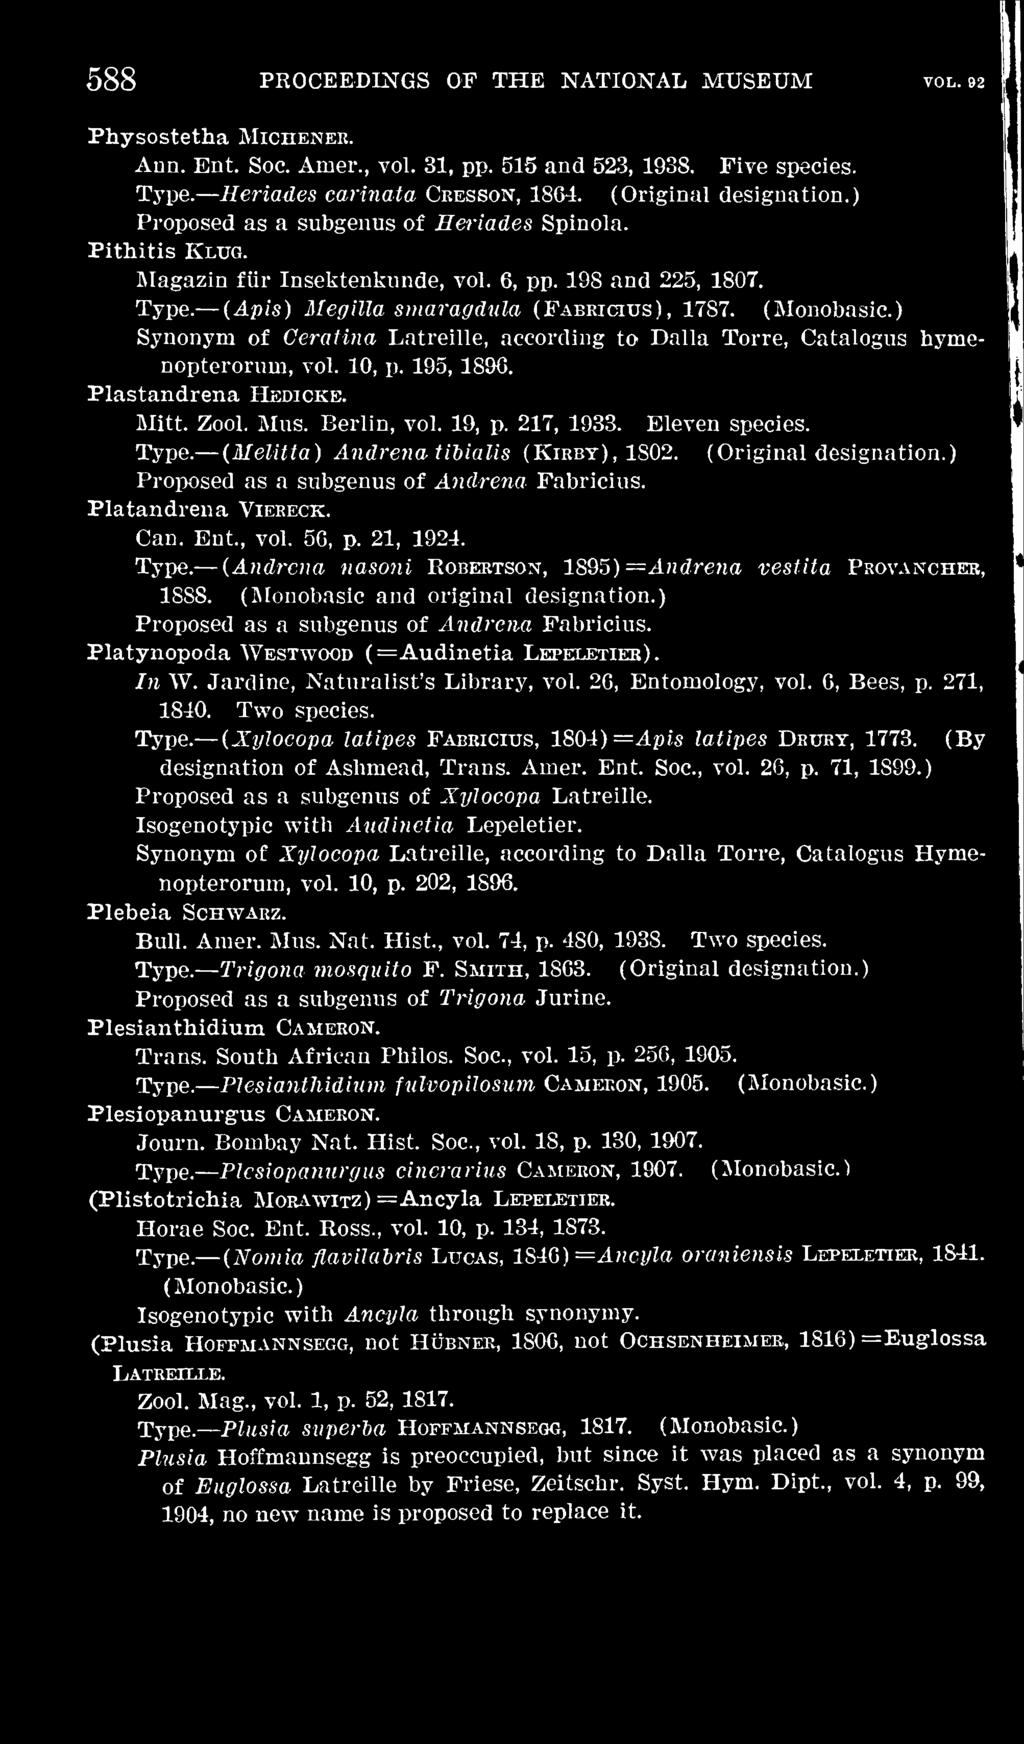 (Atidrena nasoni RoBBaiTSON, 1895) =Andrefta vestita Provancheb, 1888. (Monobasic and original Proposed as a subgenus of A?idrcna Fabricius. Platynopoda Westwood (^Audinetia Leteletieb). In W.